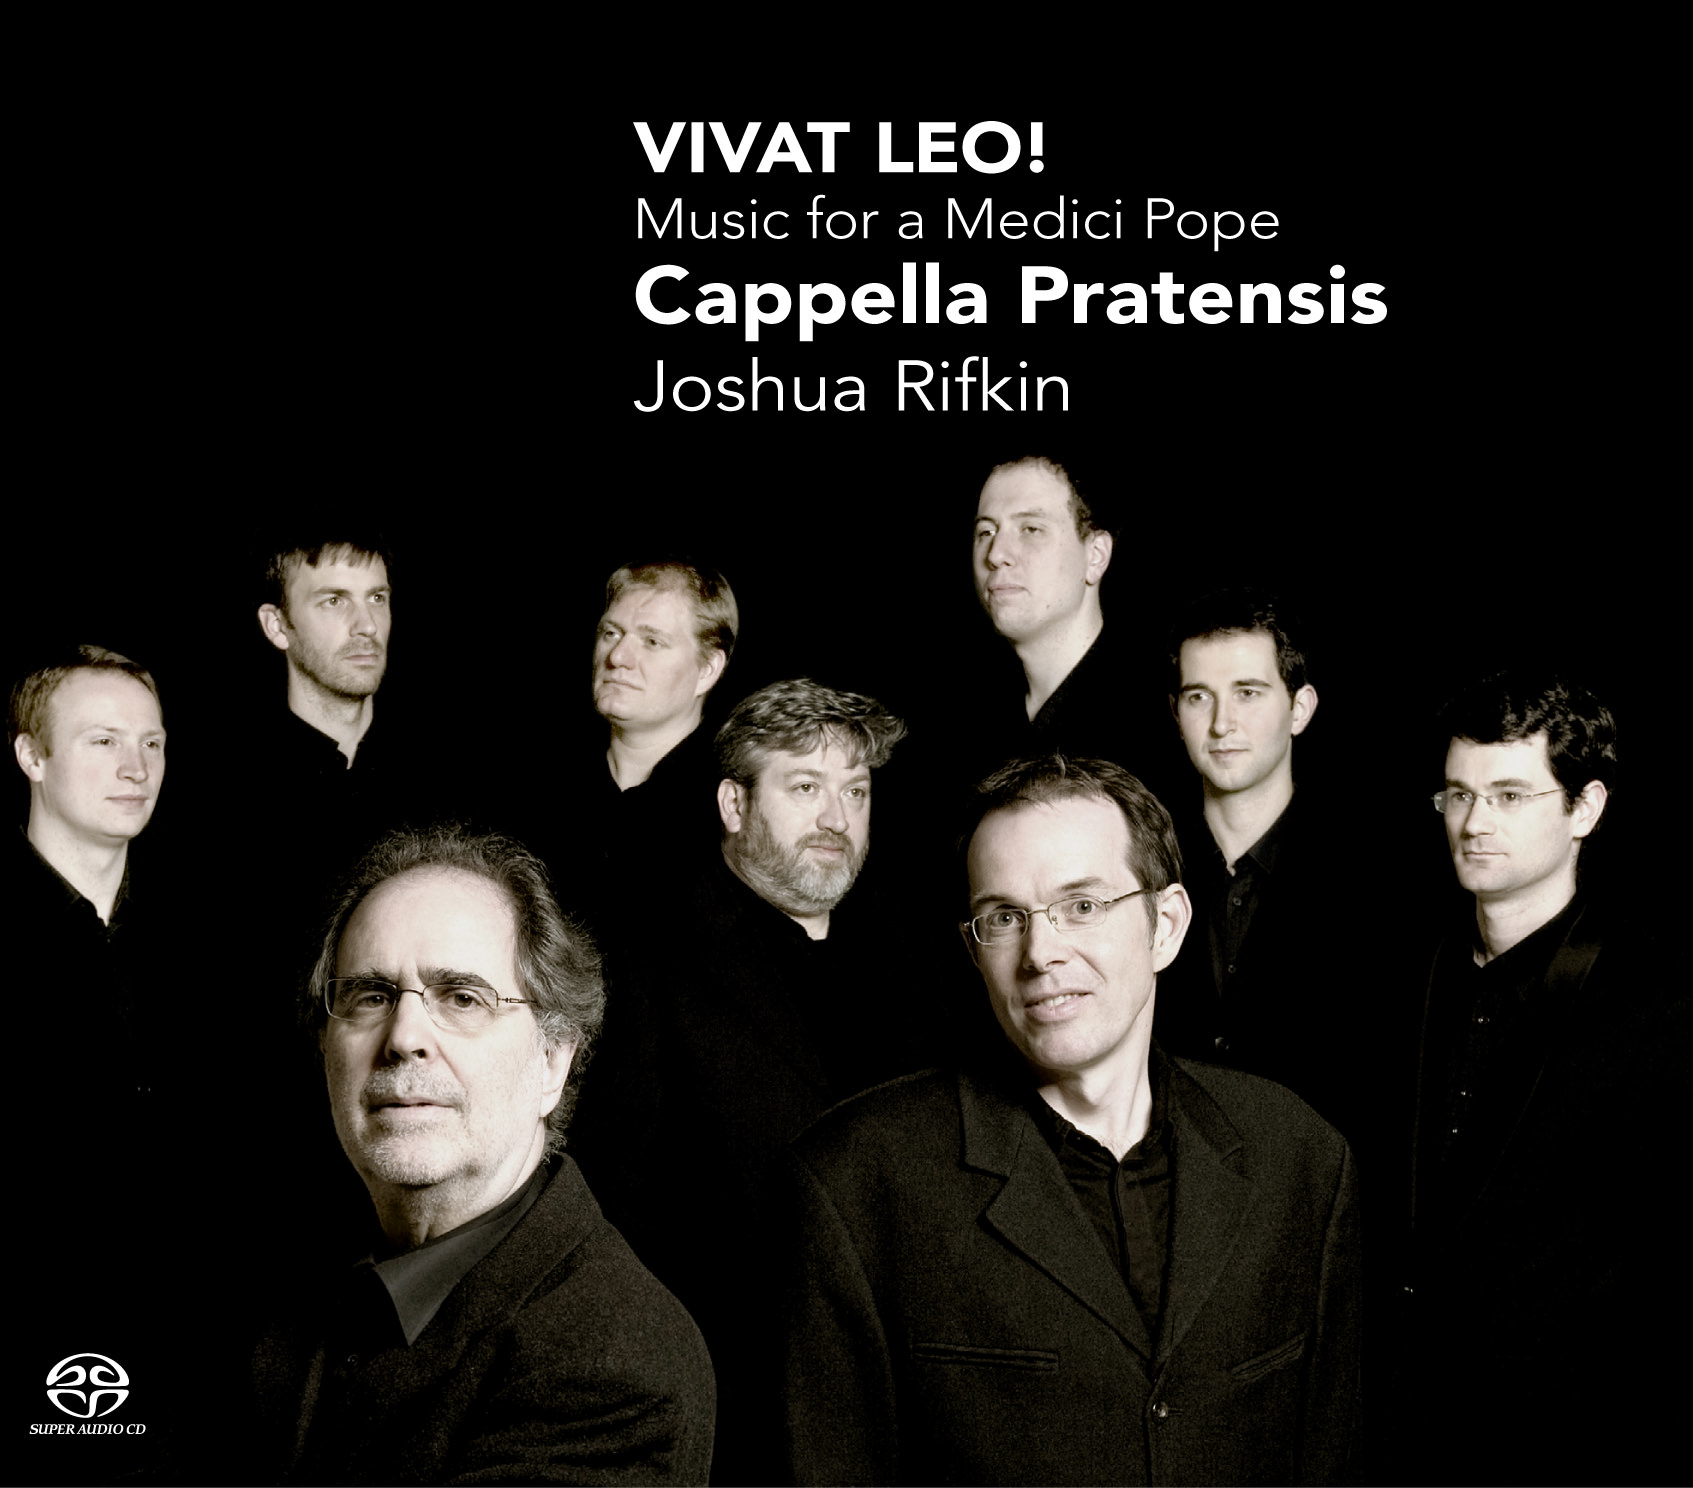 Cappella Pratensis, Joshua Rifkin - Vivat Leo! Music for a Medici Pope (2010) [nativeDSDmusic DSF DSD128/5.64MHz]